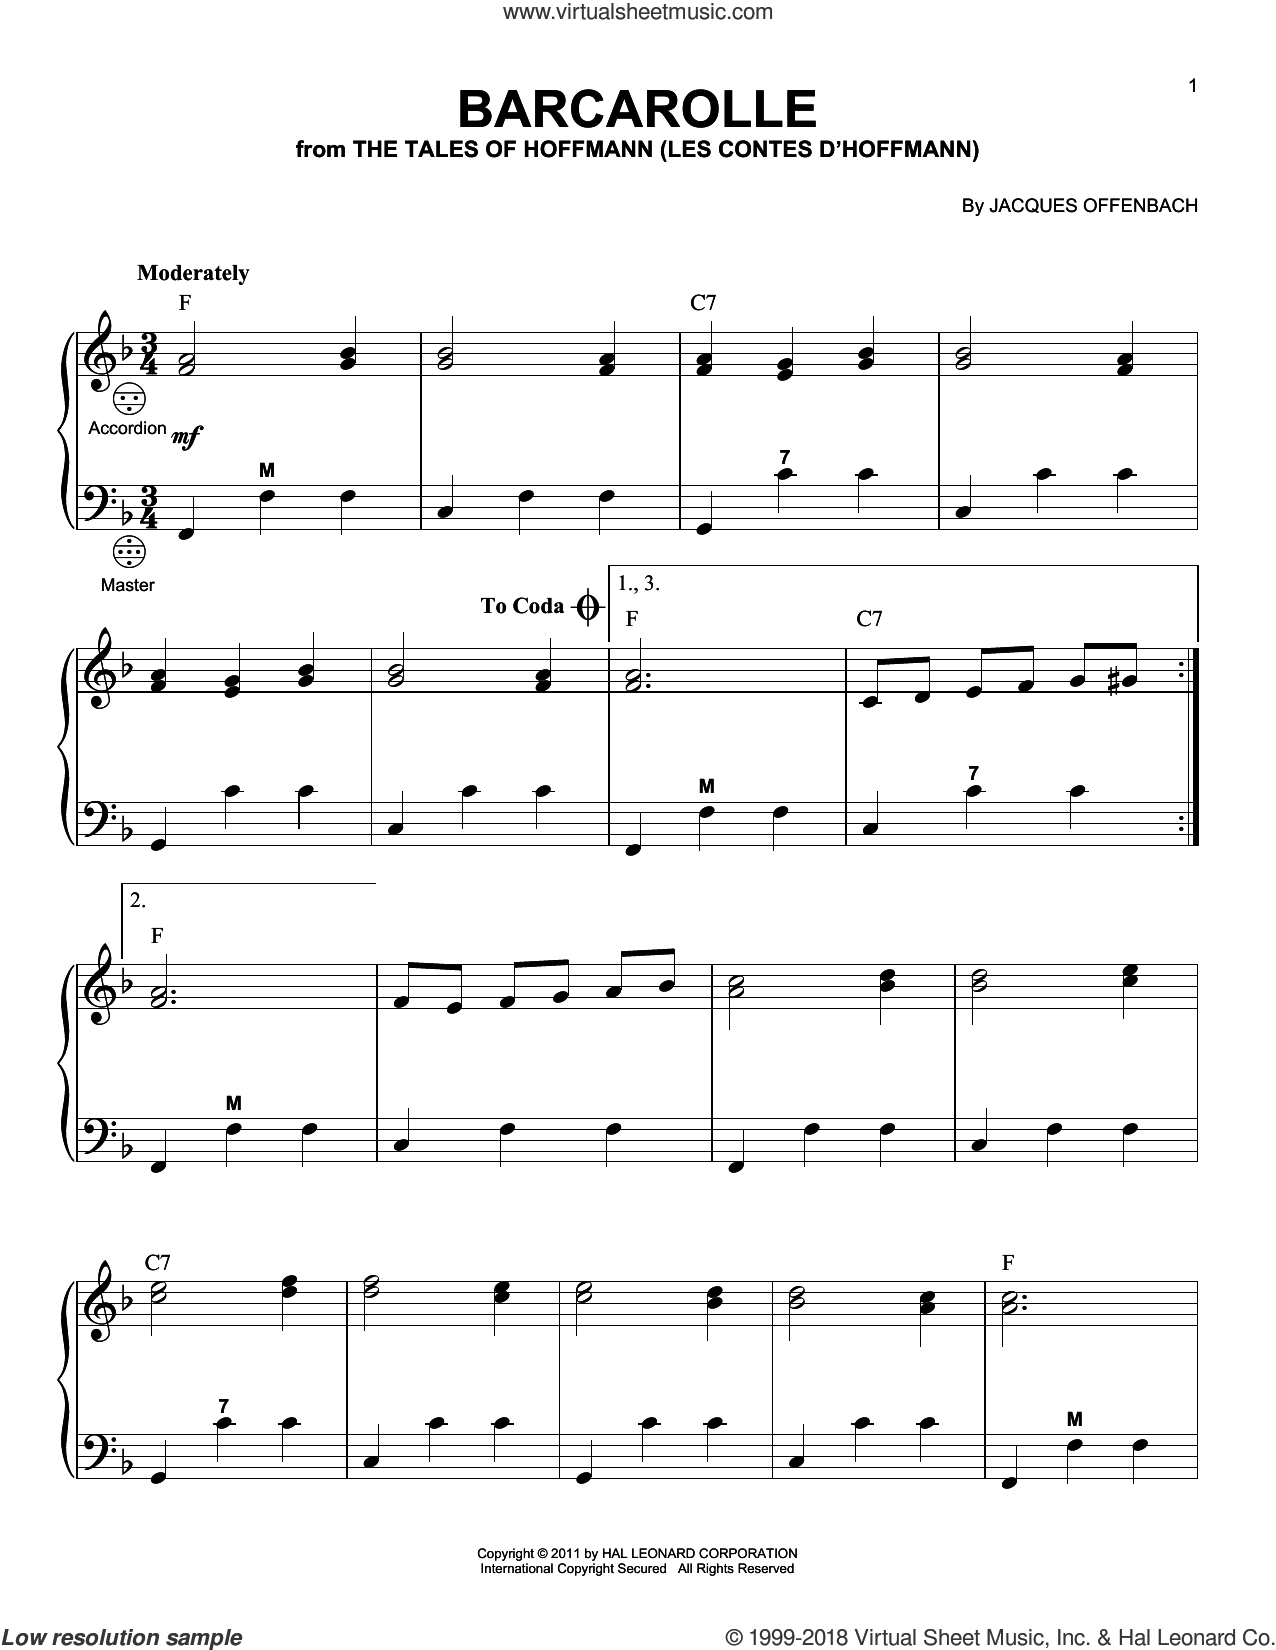 Offenbach - Barcarolle sheet music for accordion [PDF]